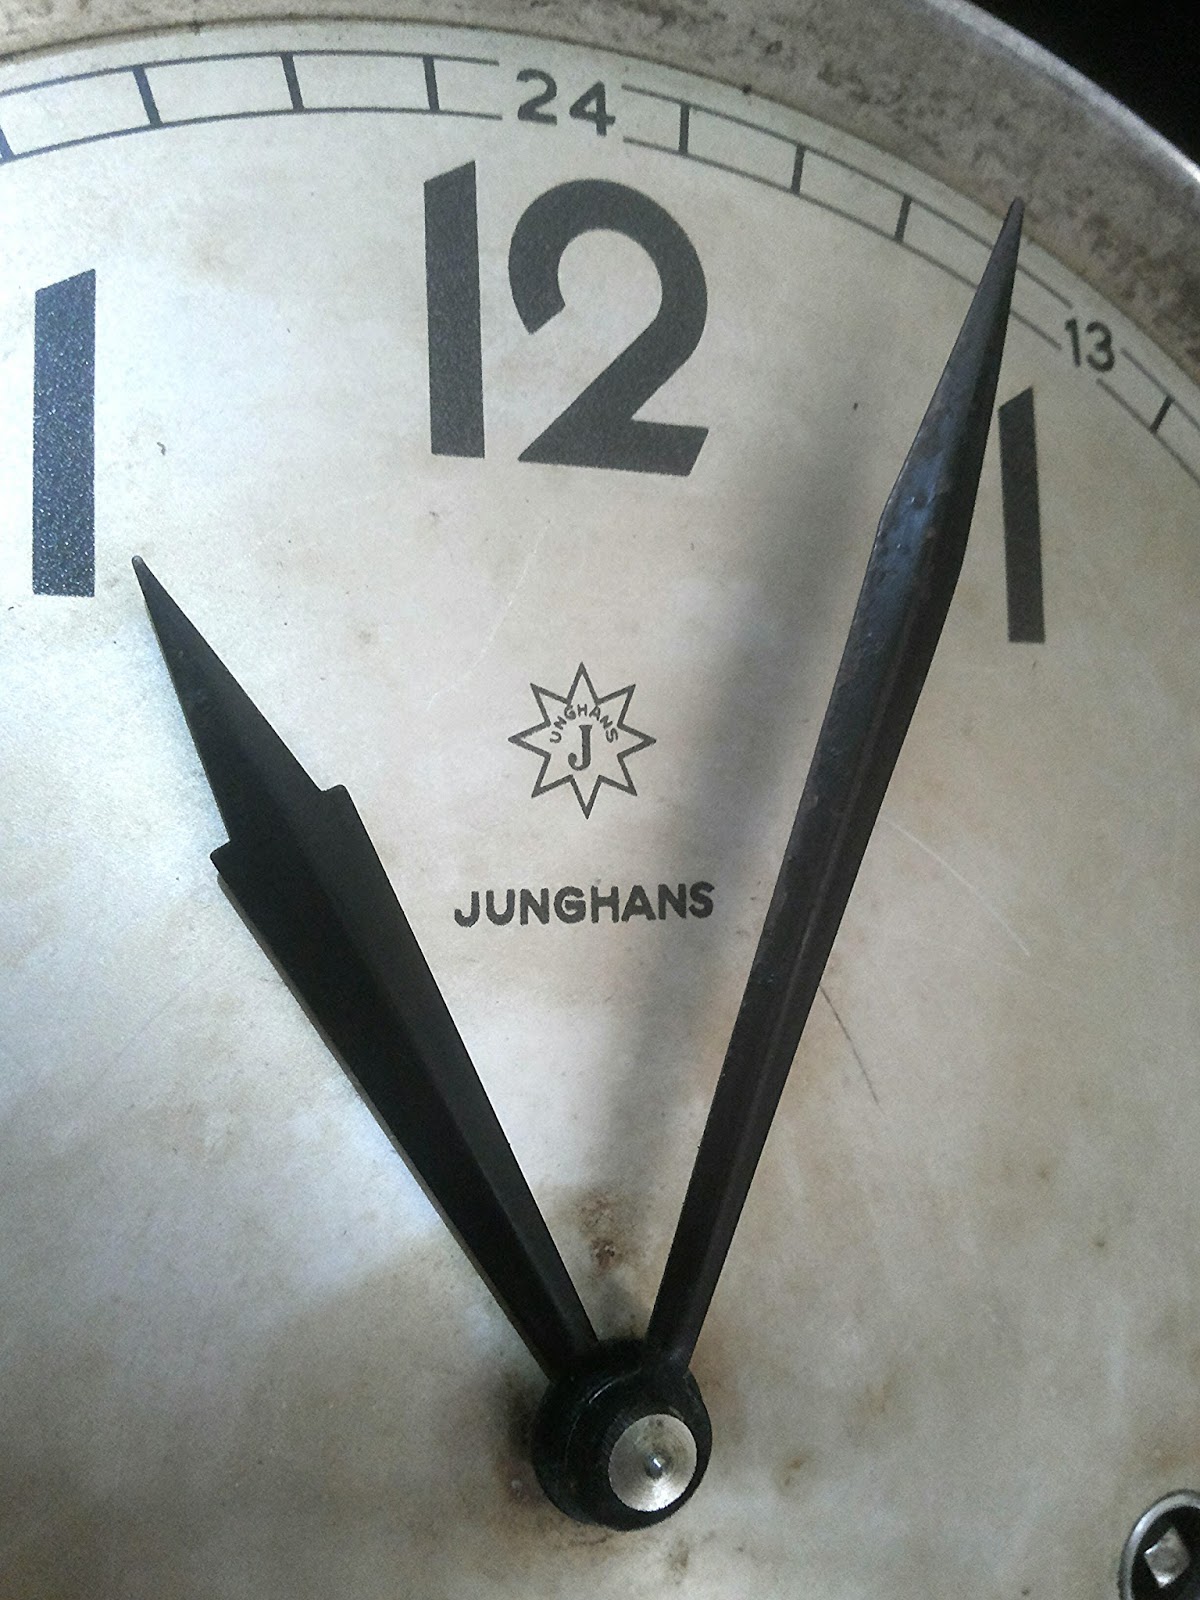 Знак часы 10 10. Клеймо Junghans. Клеймо Junghans часы Junghans. Логотип часов Junghans. Часы Юнганс клеймо.